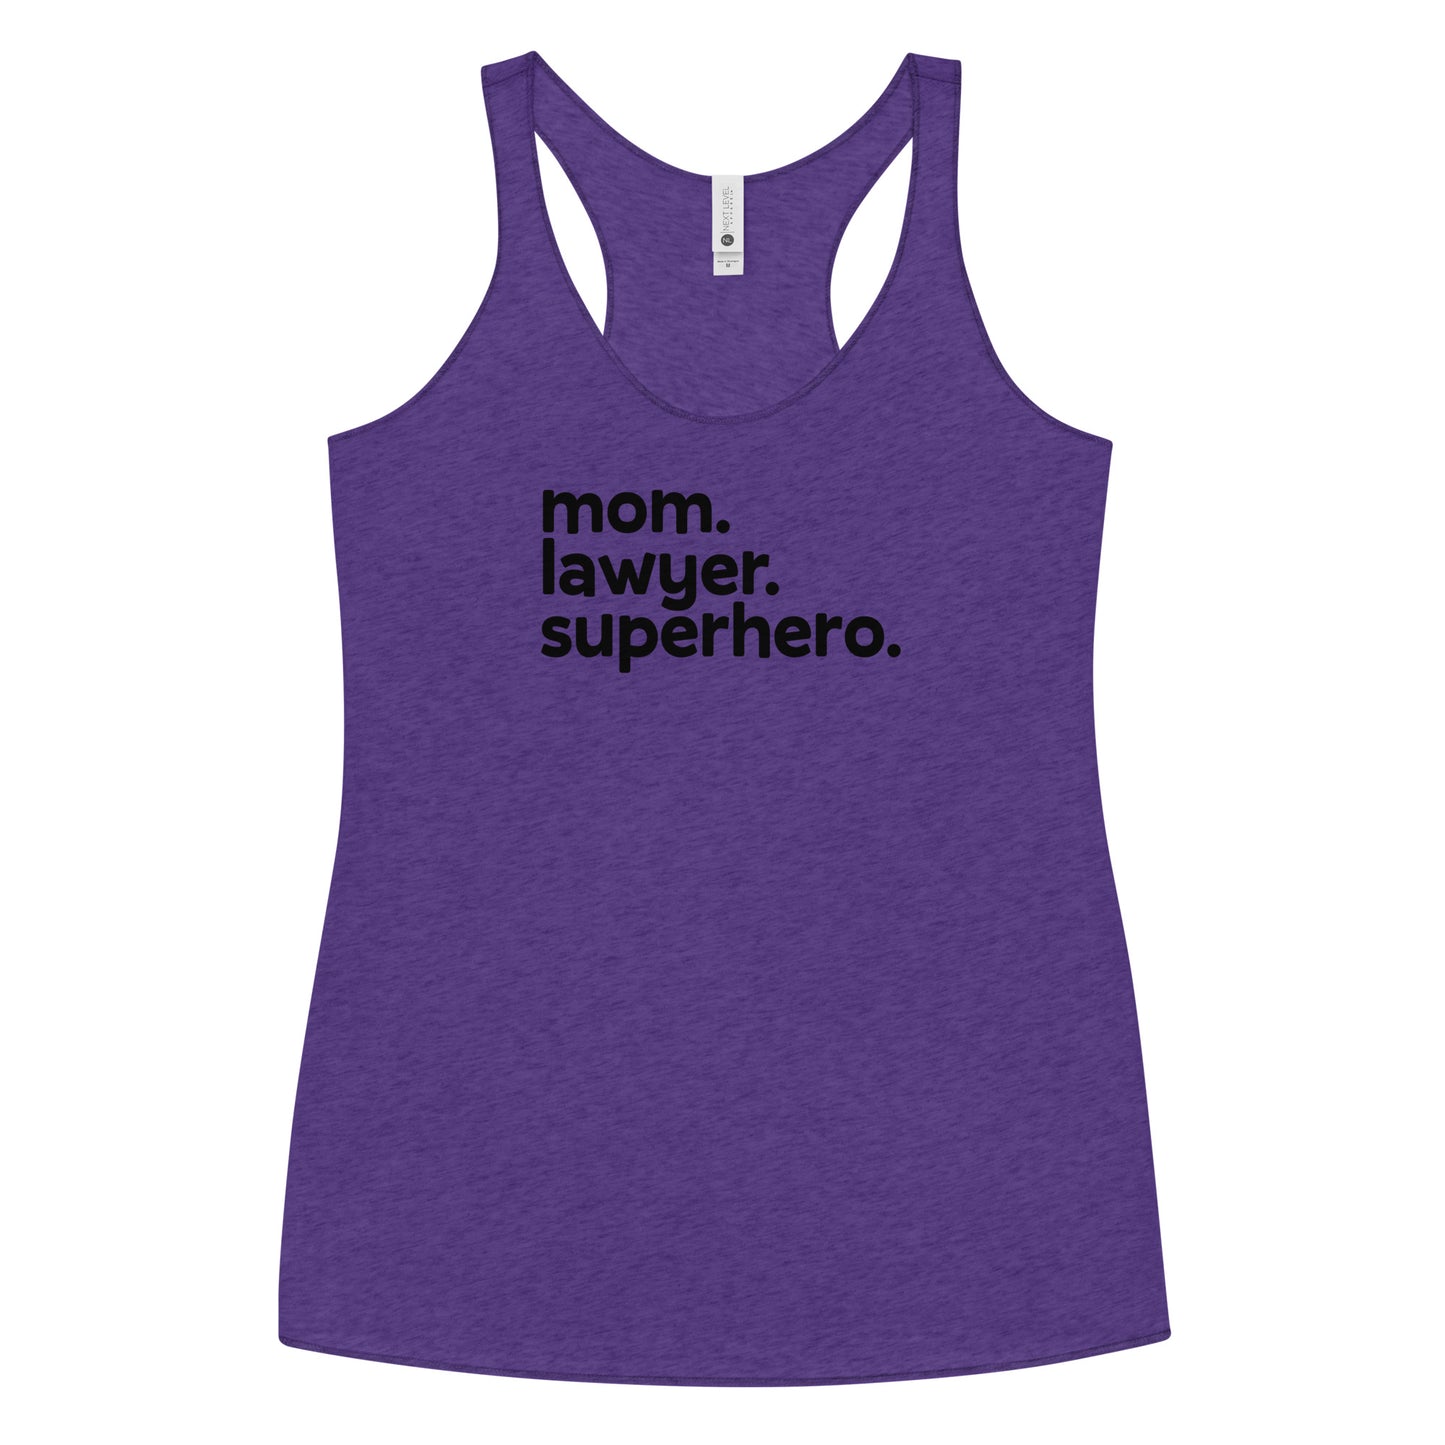 Mom, Lawyer, Superhero - Women's Tank Top